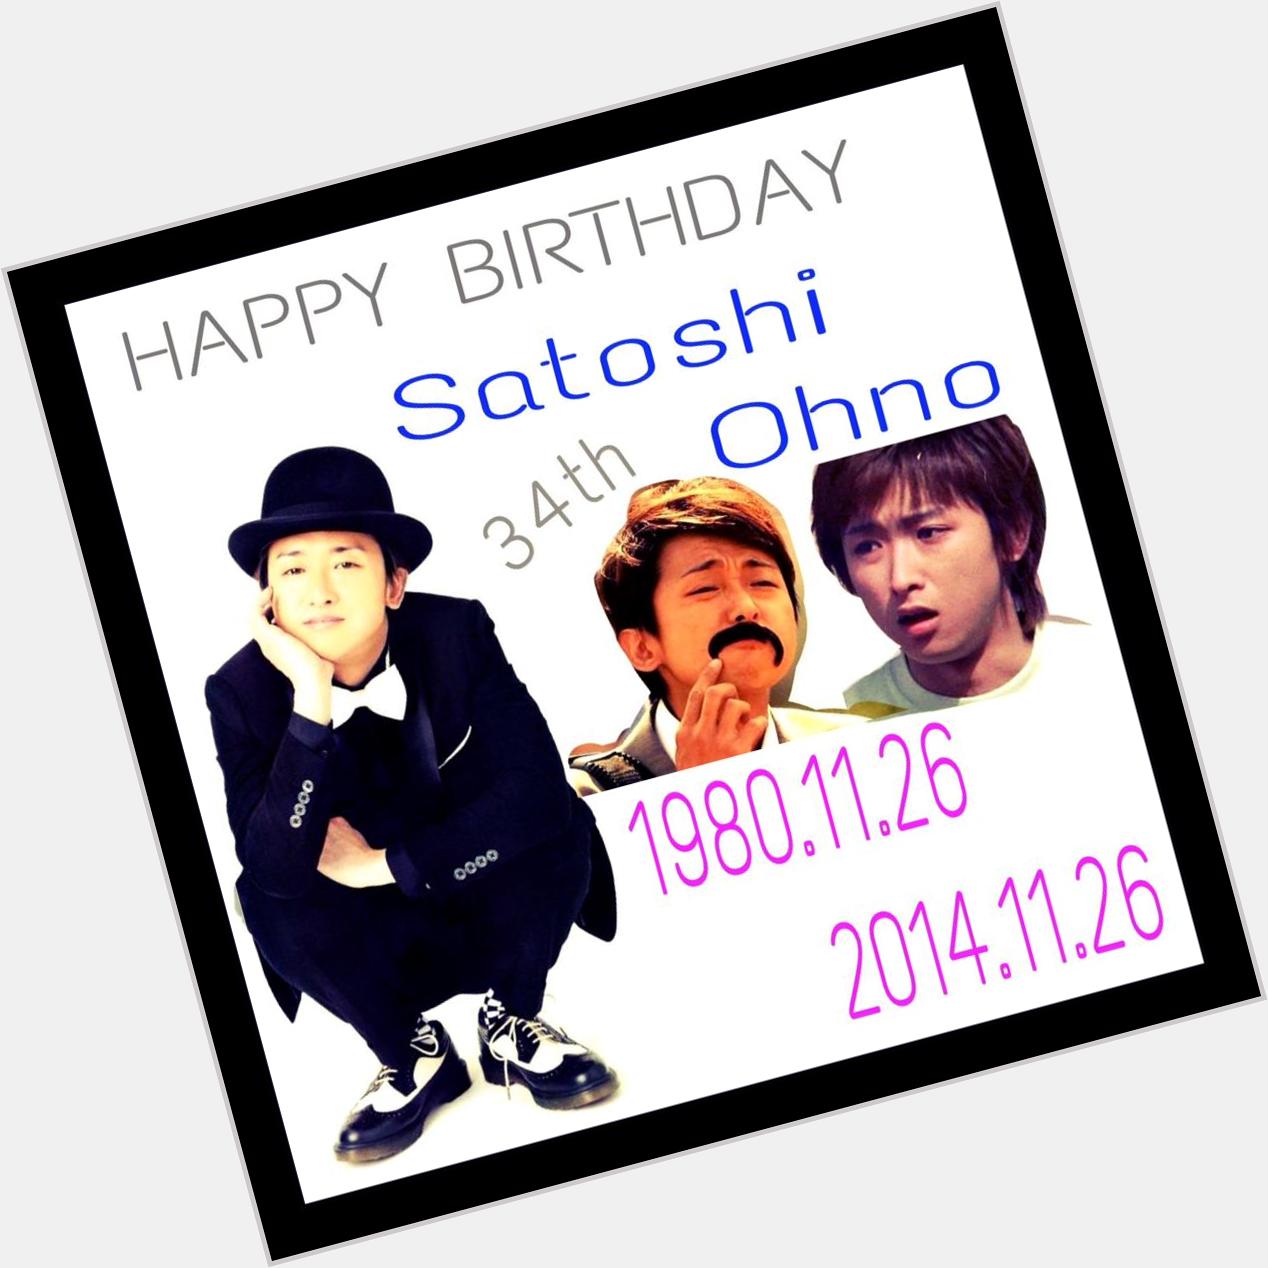 HAPPY BIRTHDAY 
        To Satoshi Ohno .

1980.11.26 2014.11.26

34th Anniversary                 